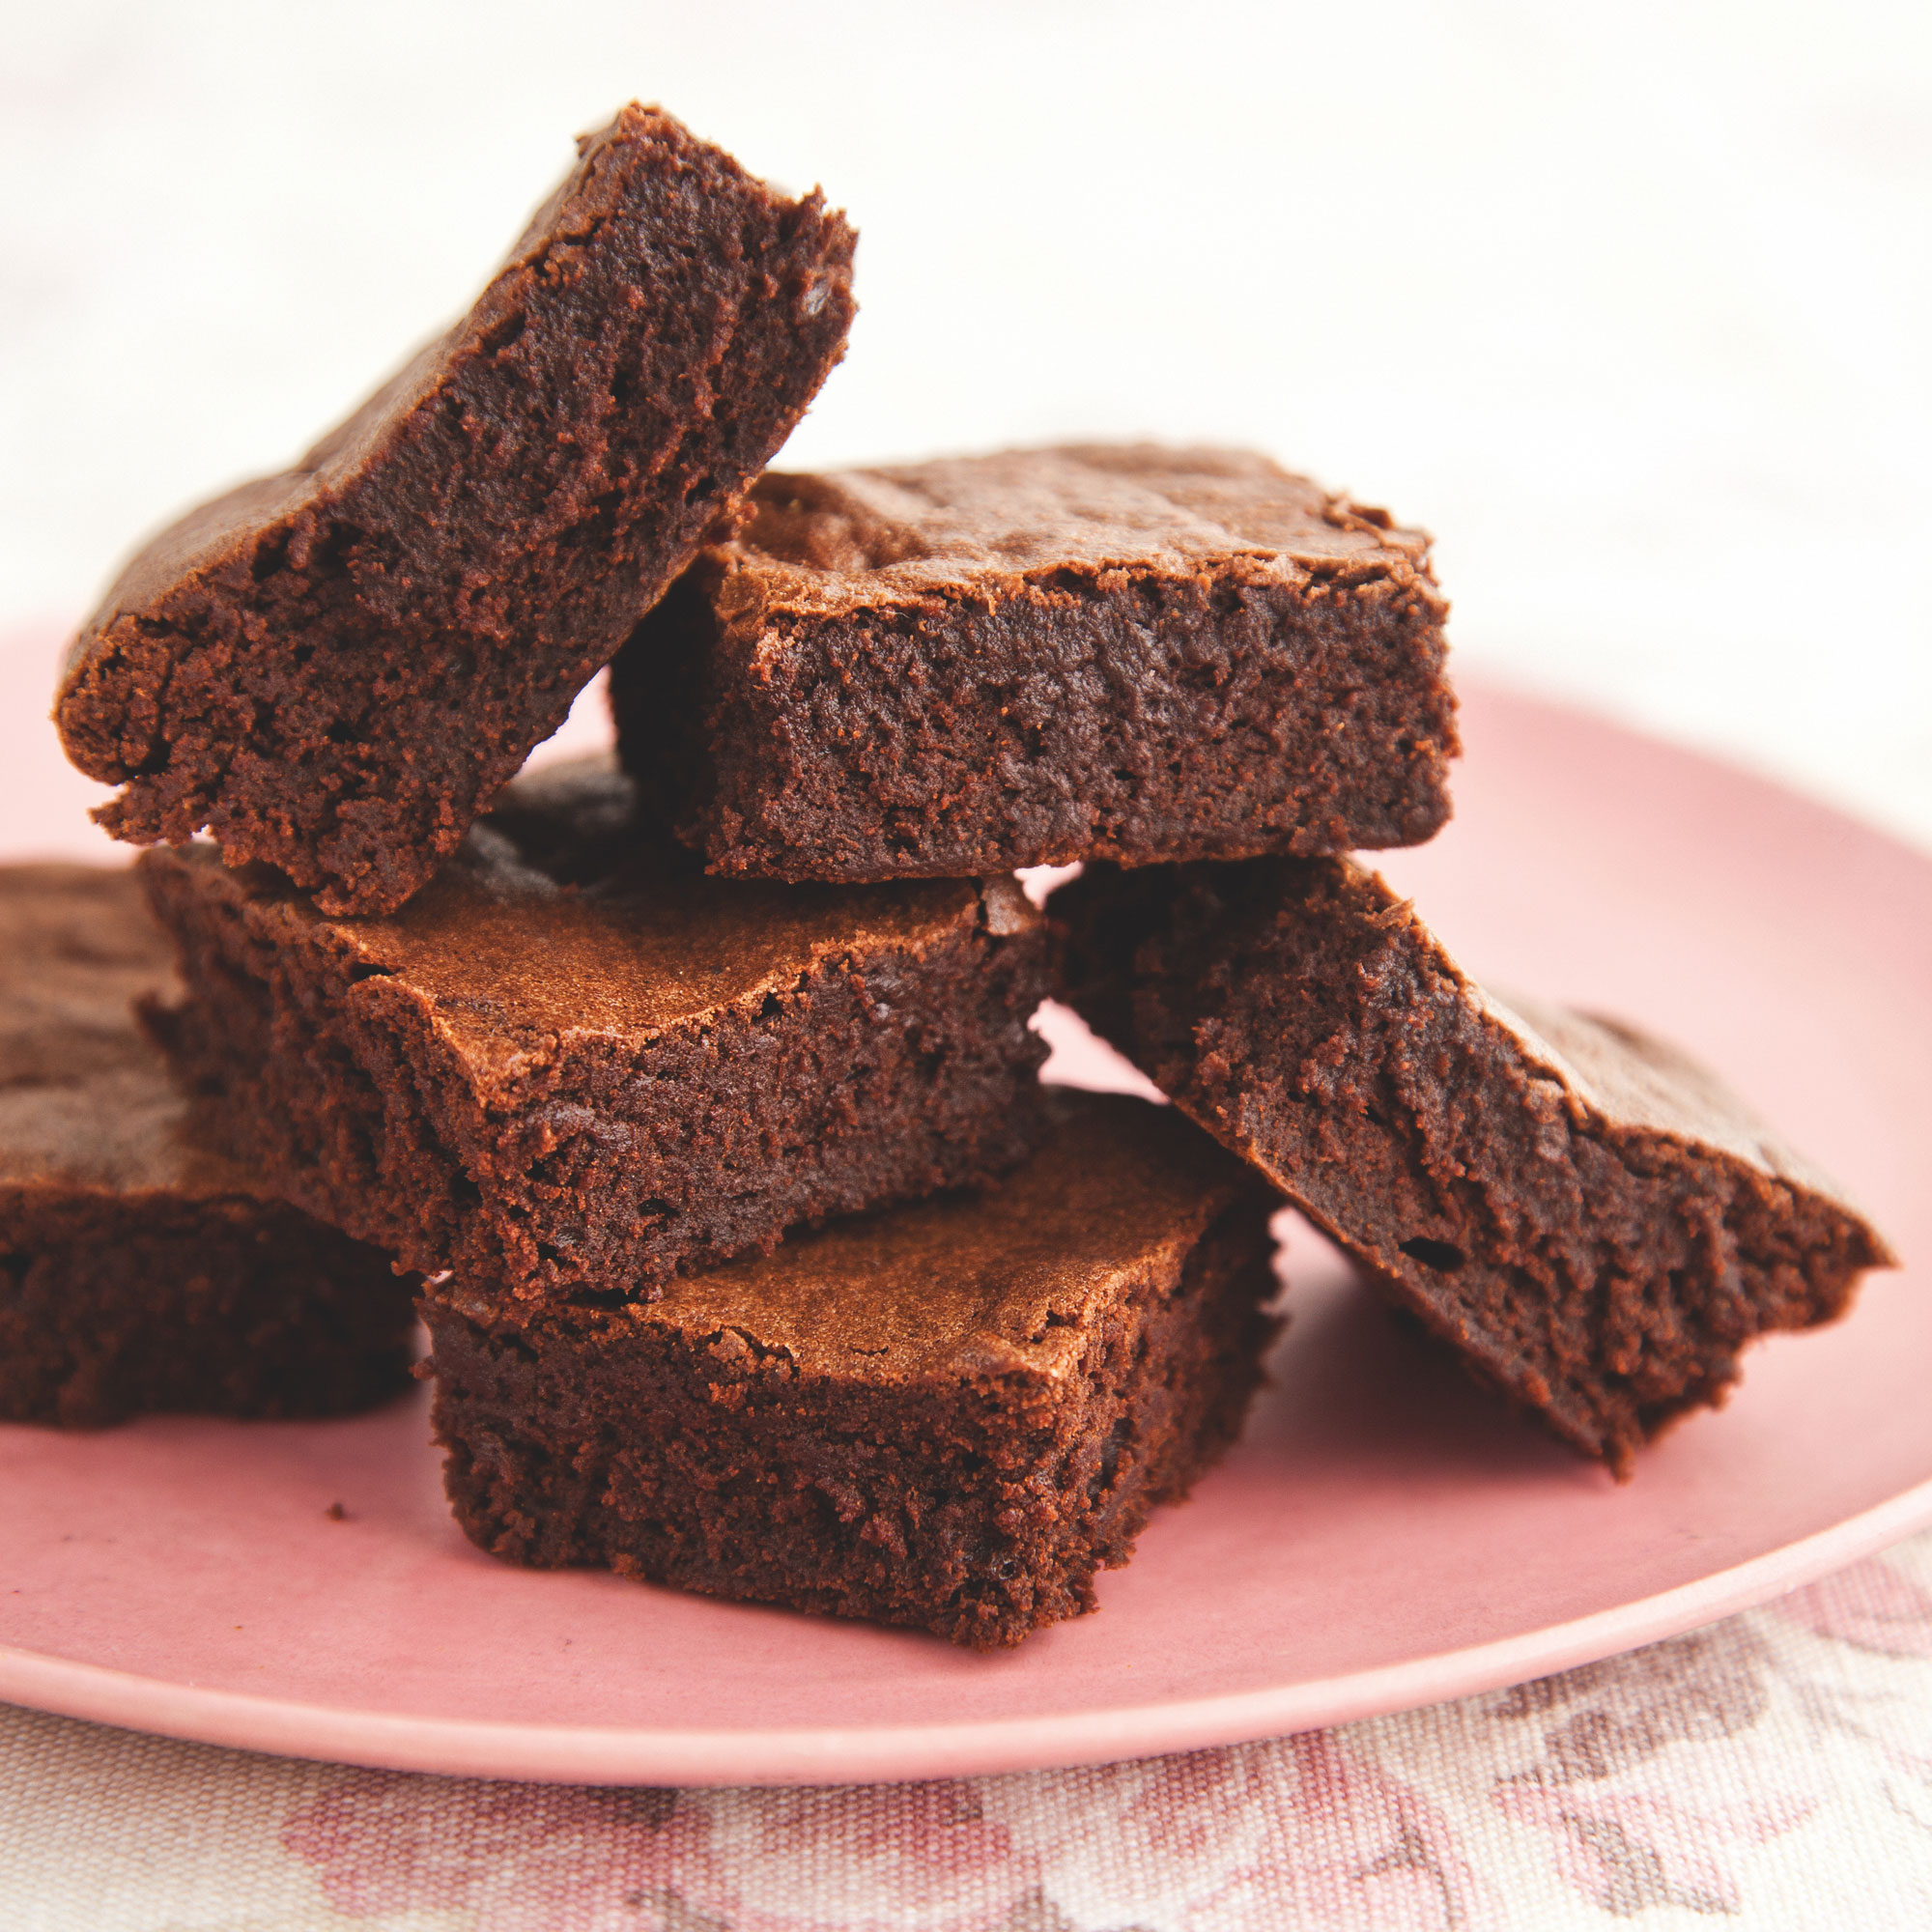 Chocolate brownie - Wikipedia